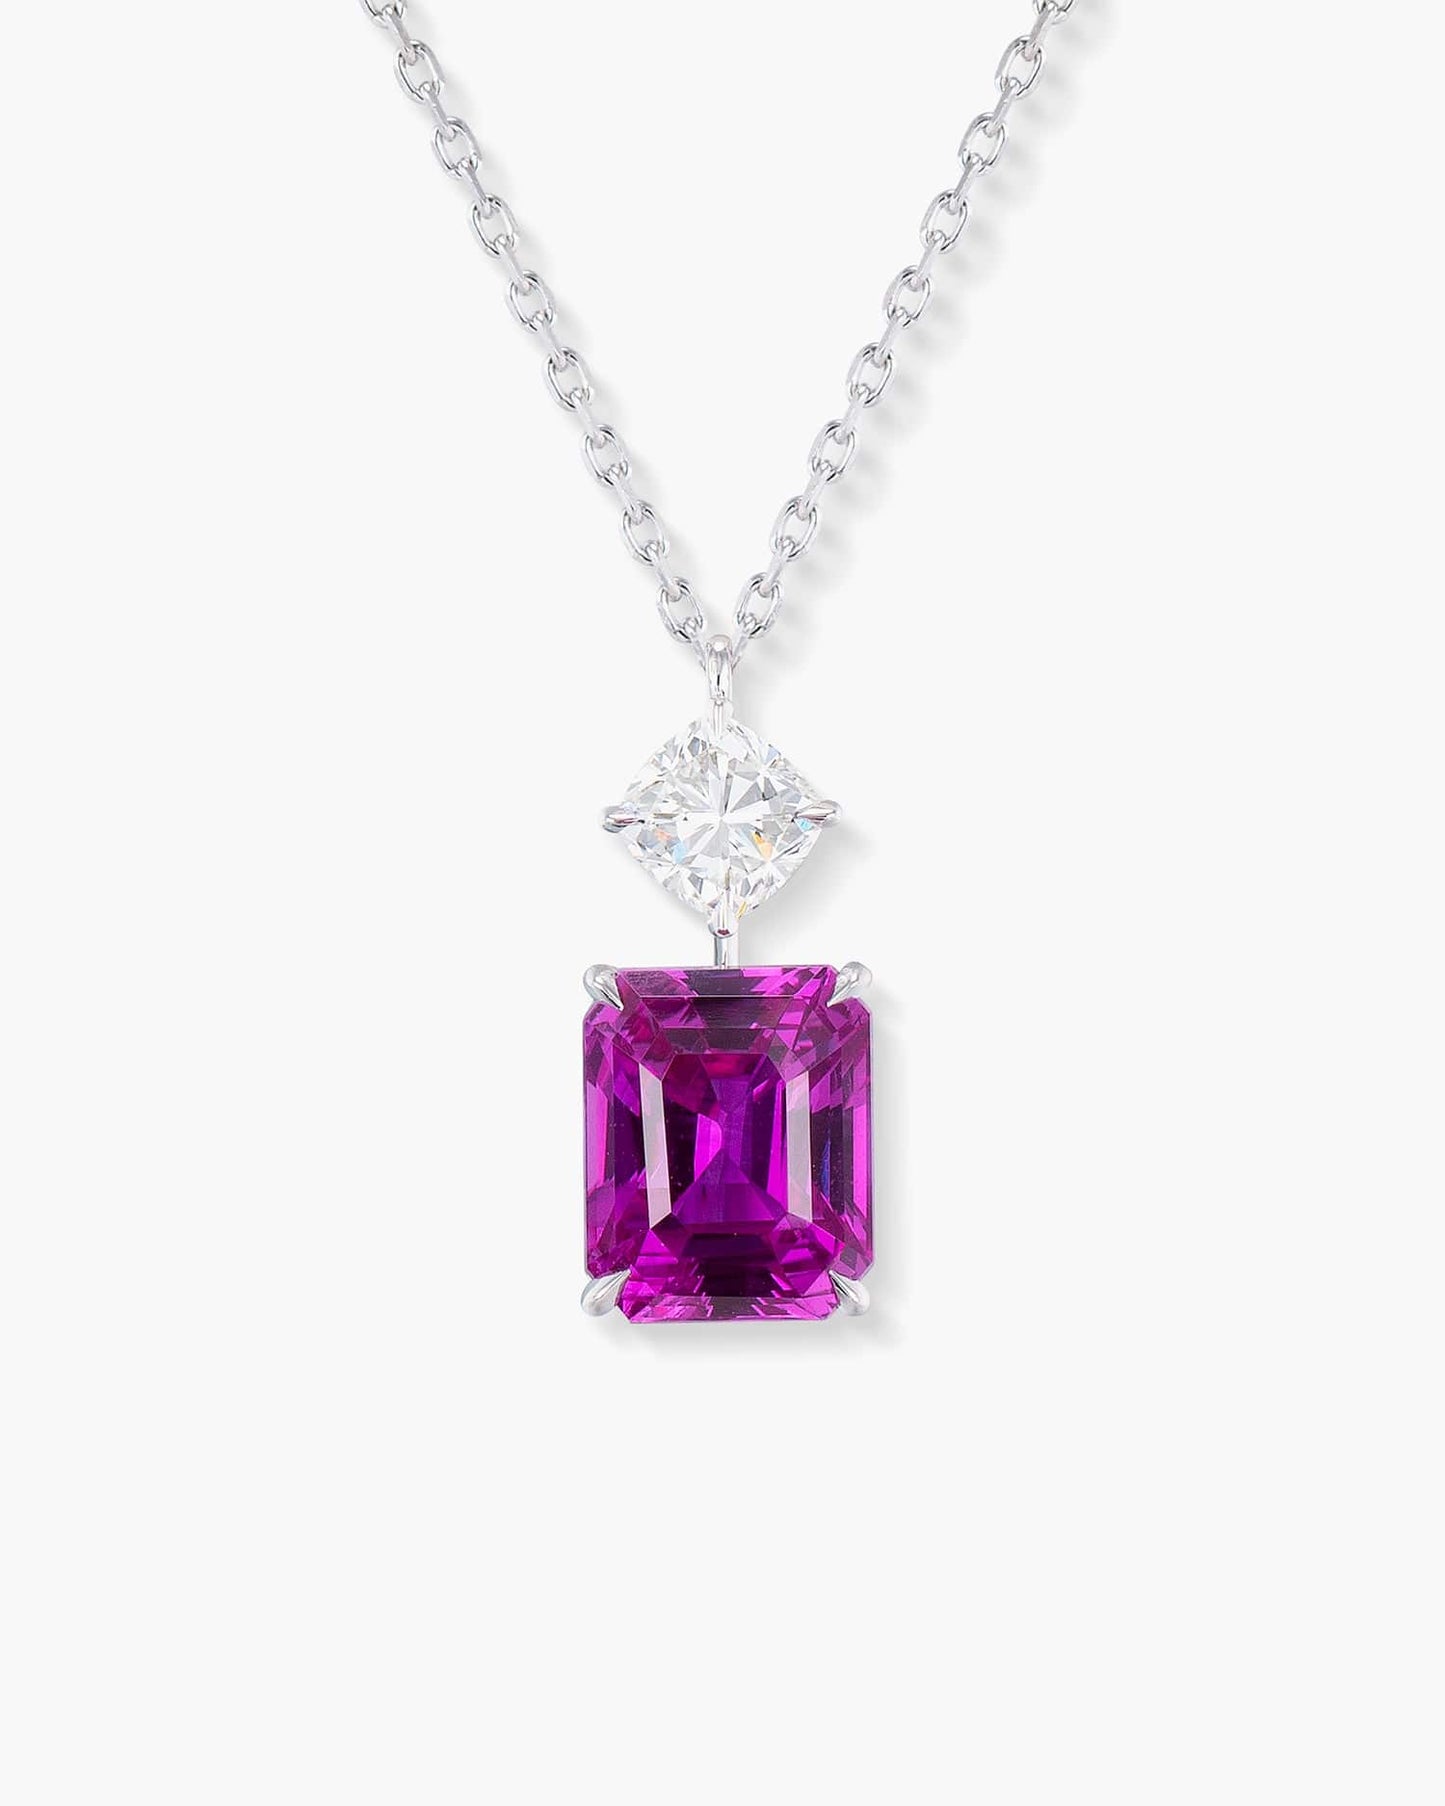 3.00 carat Emerald Cut Ceylon Pink Sapphire and Diamond Pendant Necklace